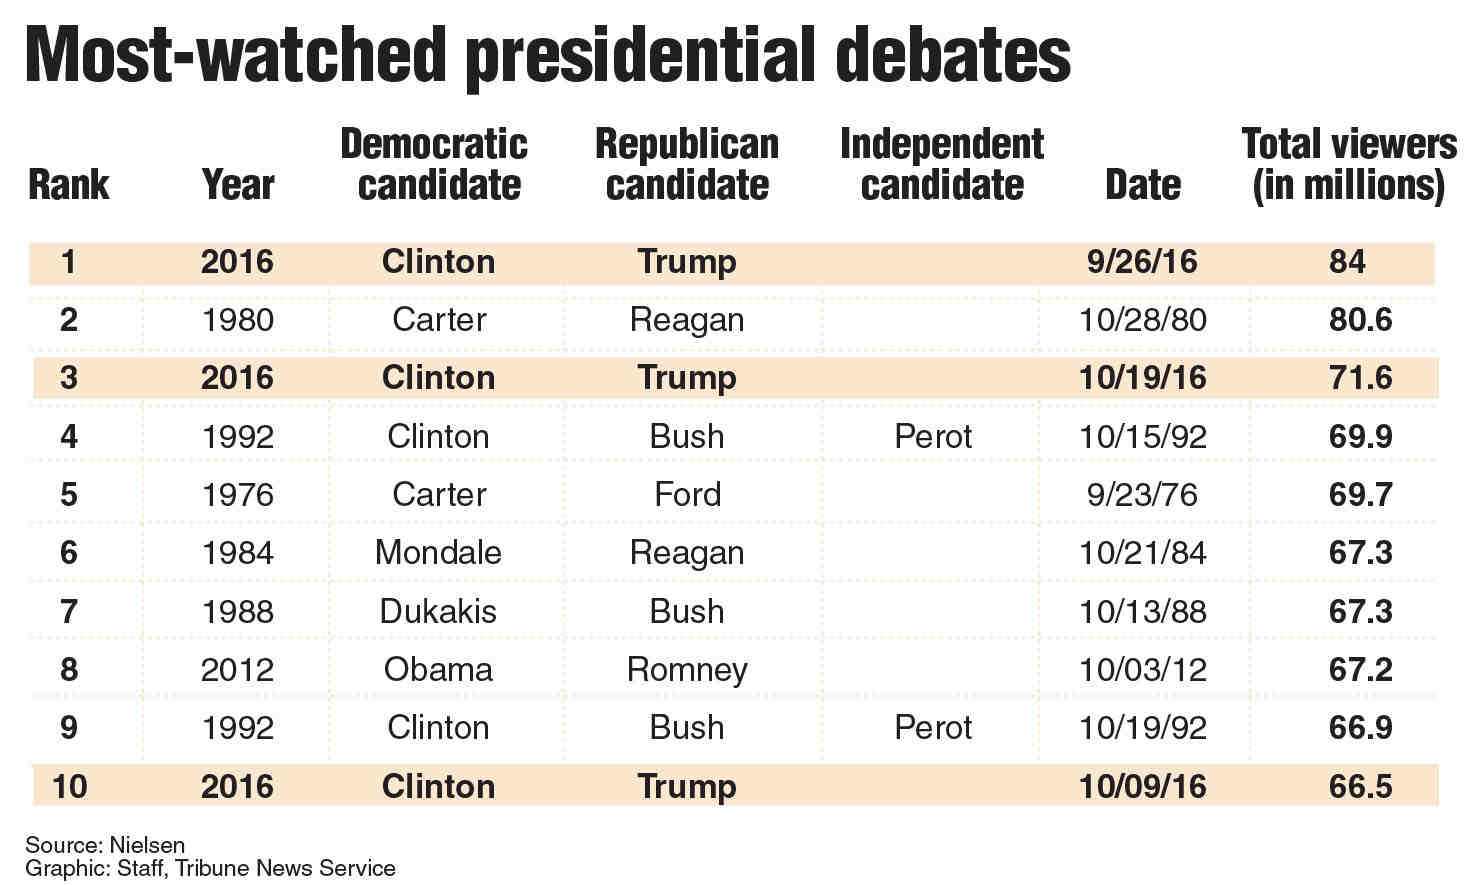 Most watched presidential debates